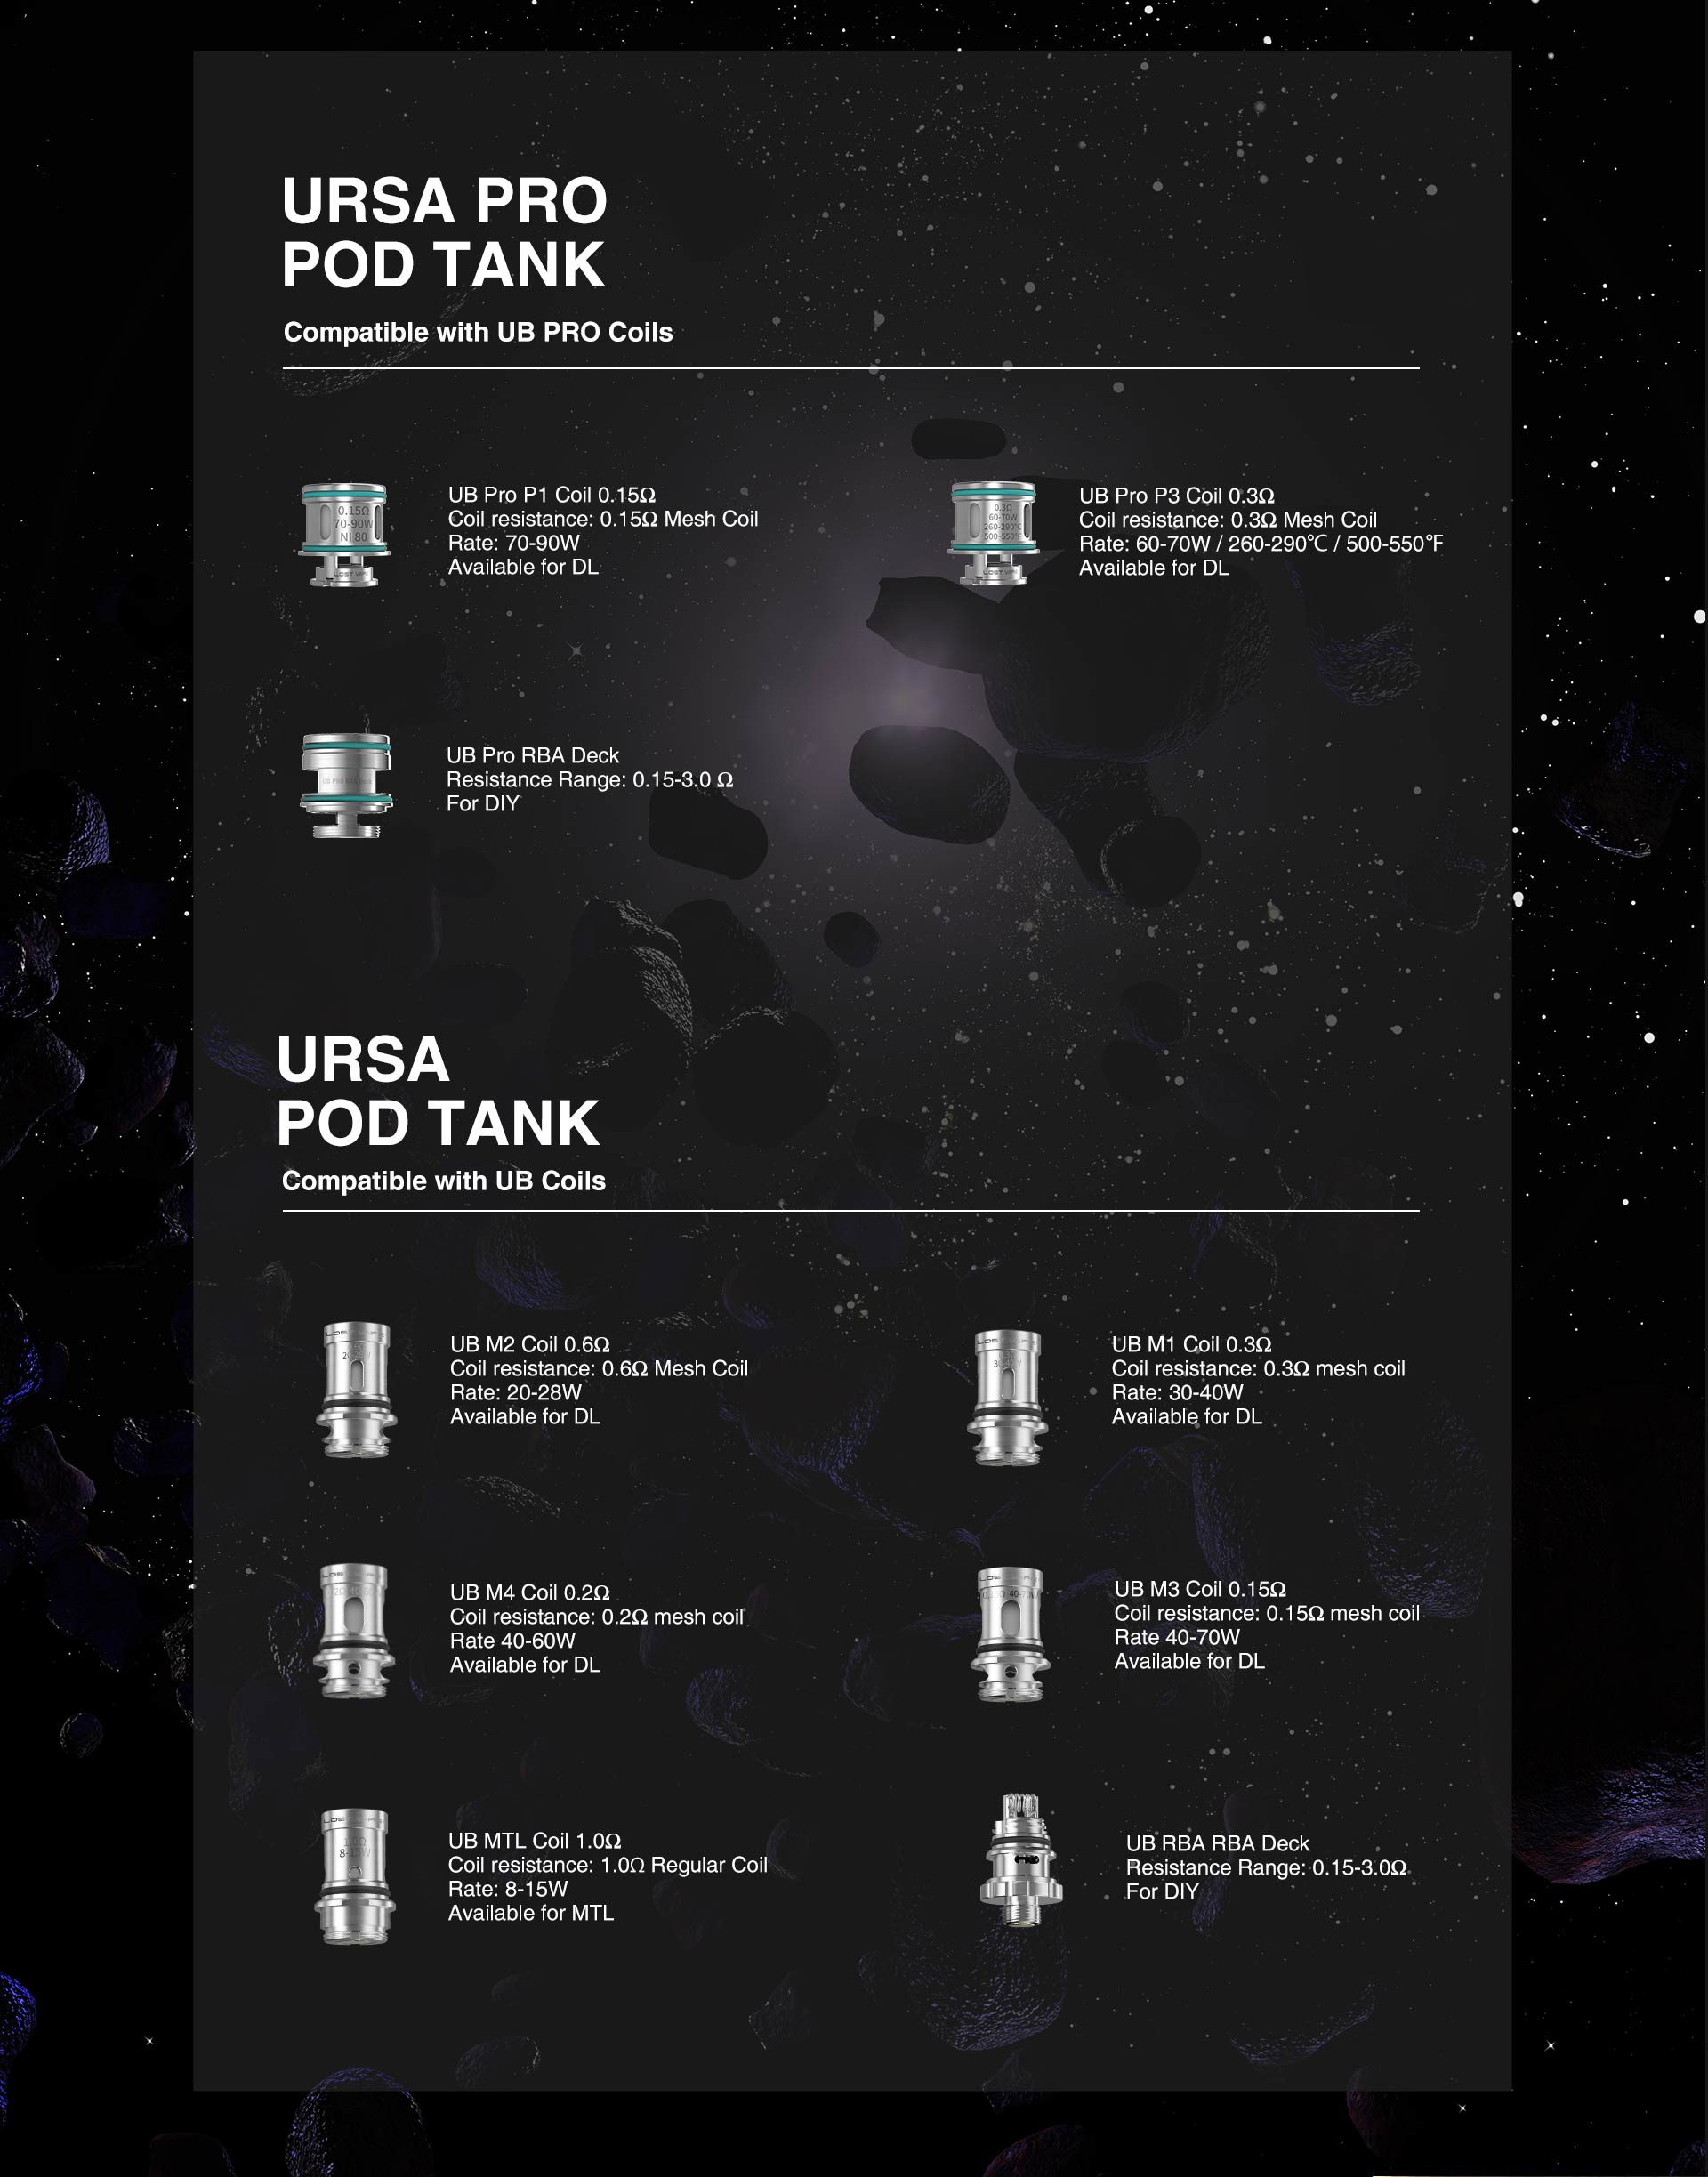 URSA Pro Pod Tank and URSA Pod Tank